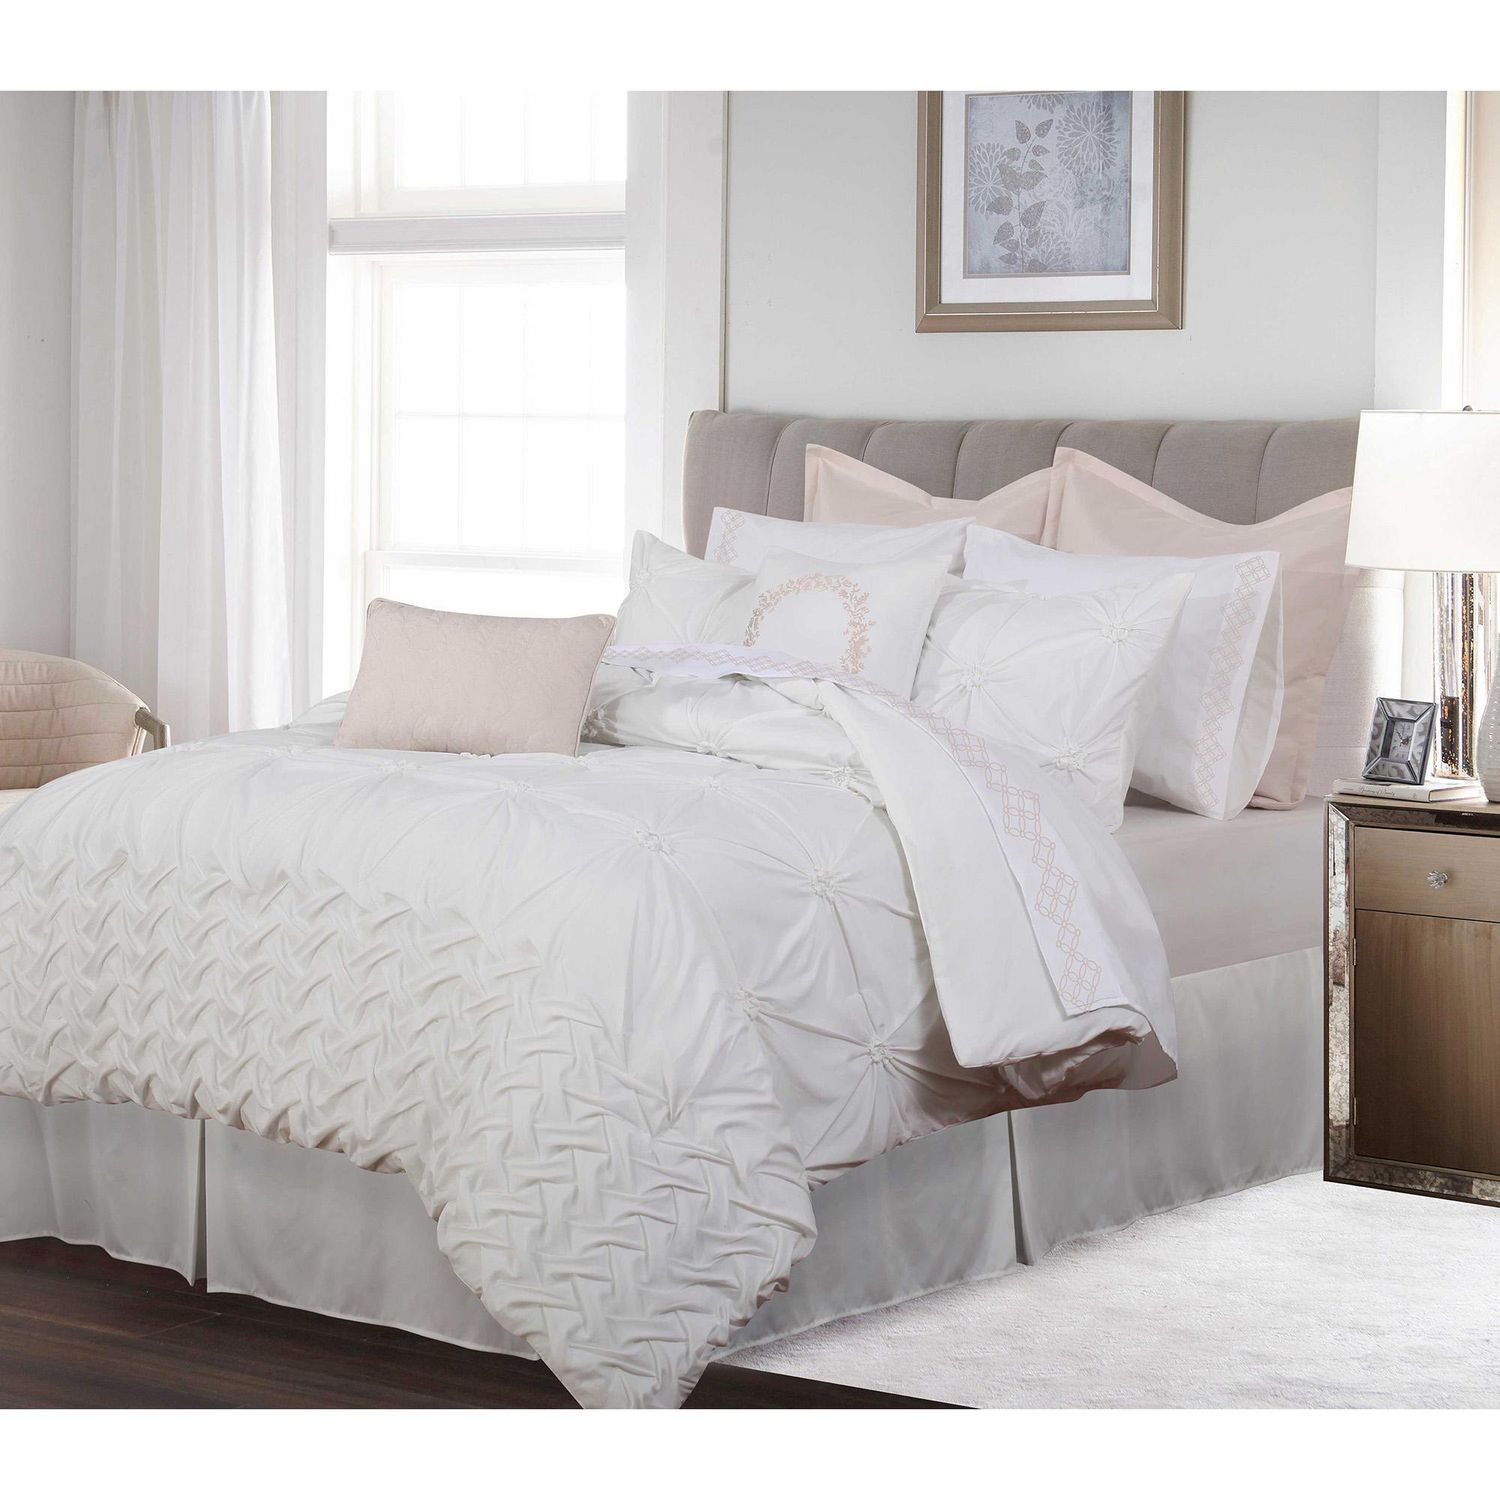 Safdie & Co. Comforter Set 6PC Q Manoir White | Walmart Canada